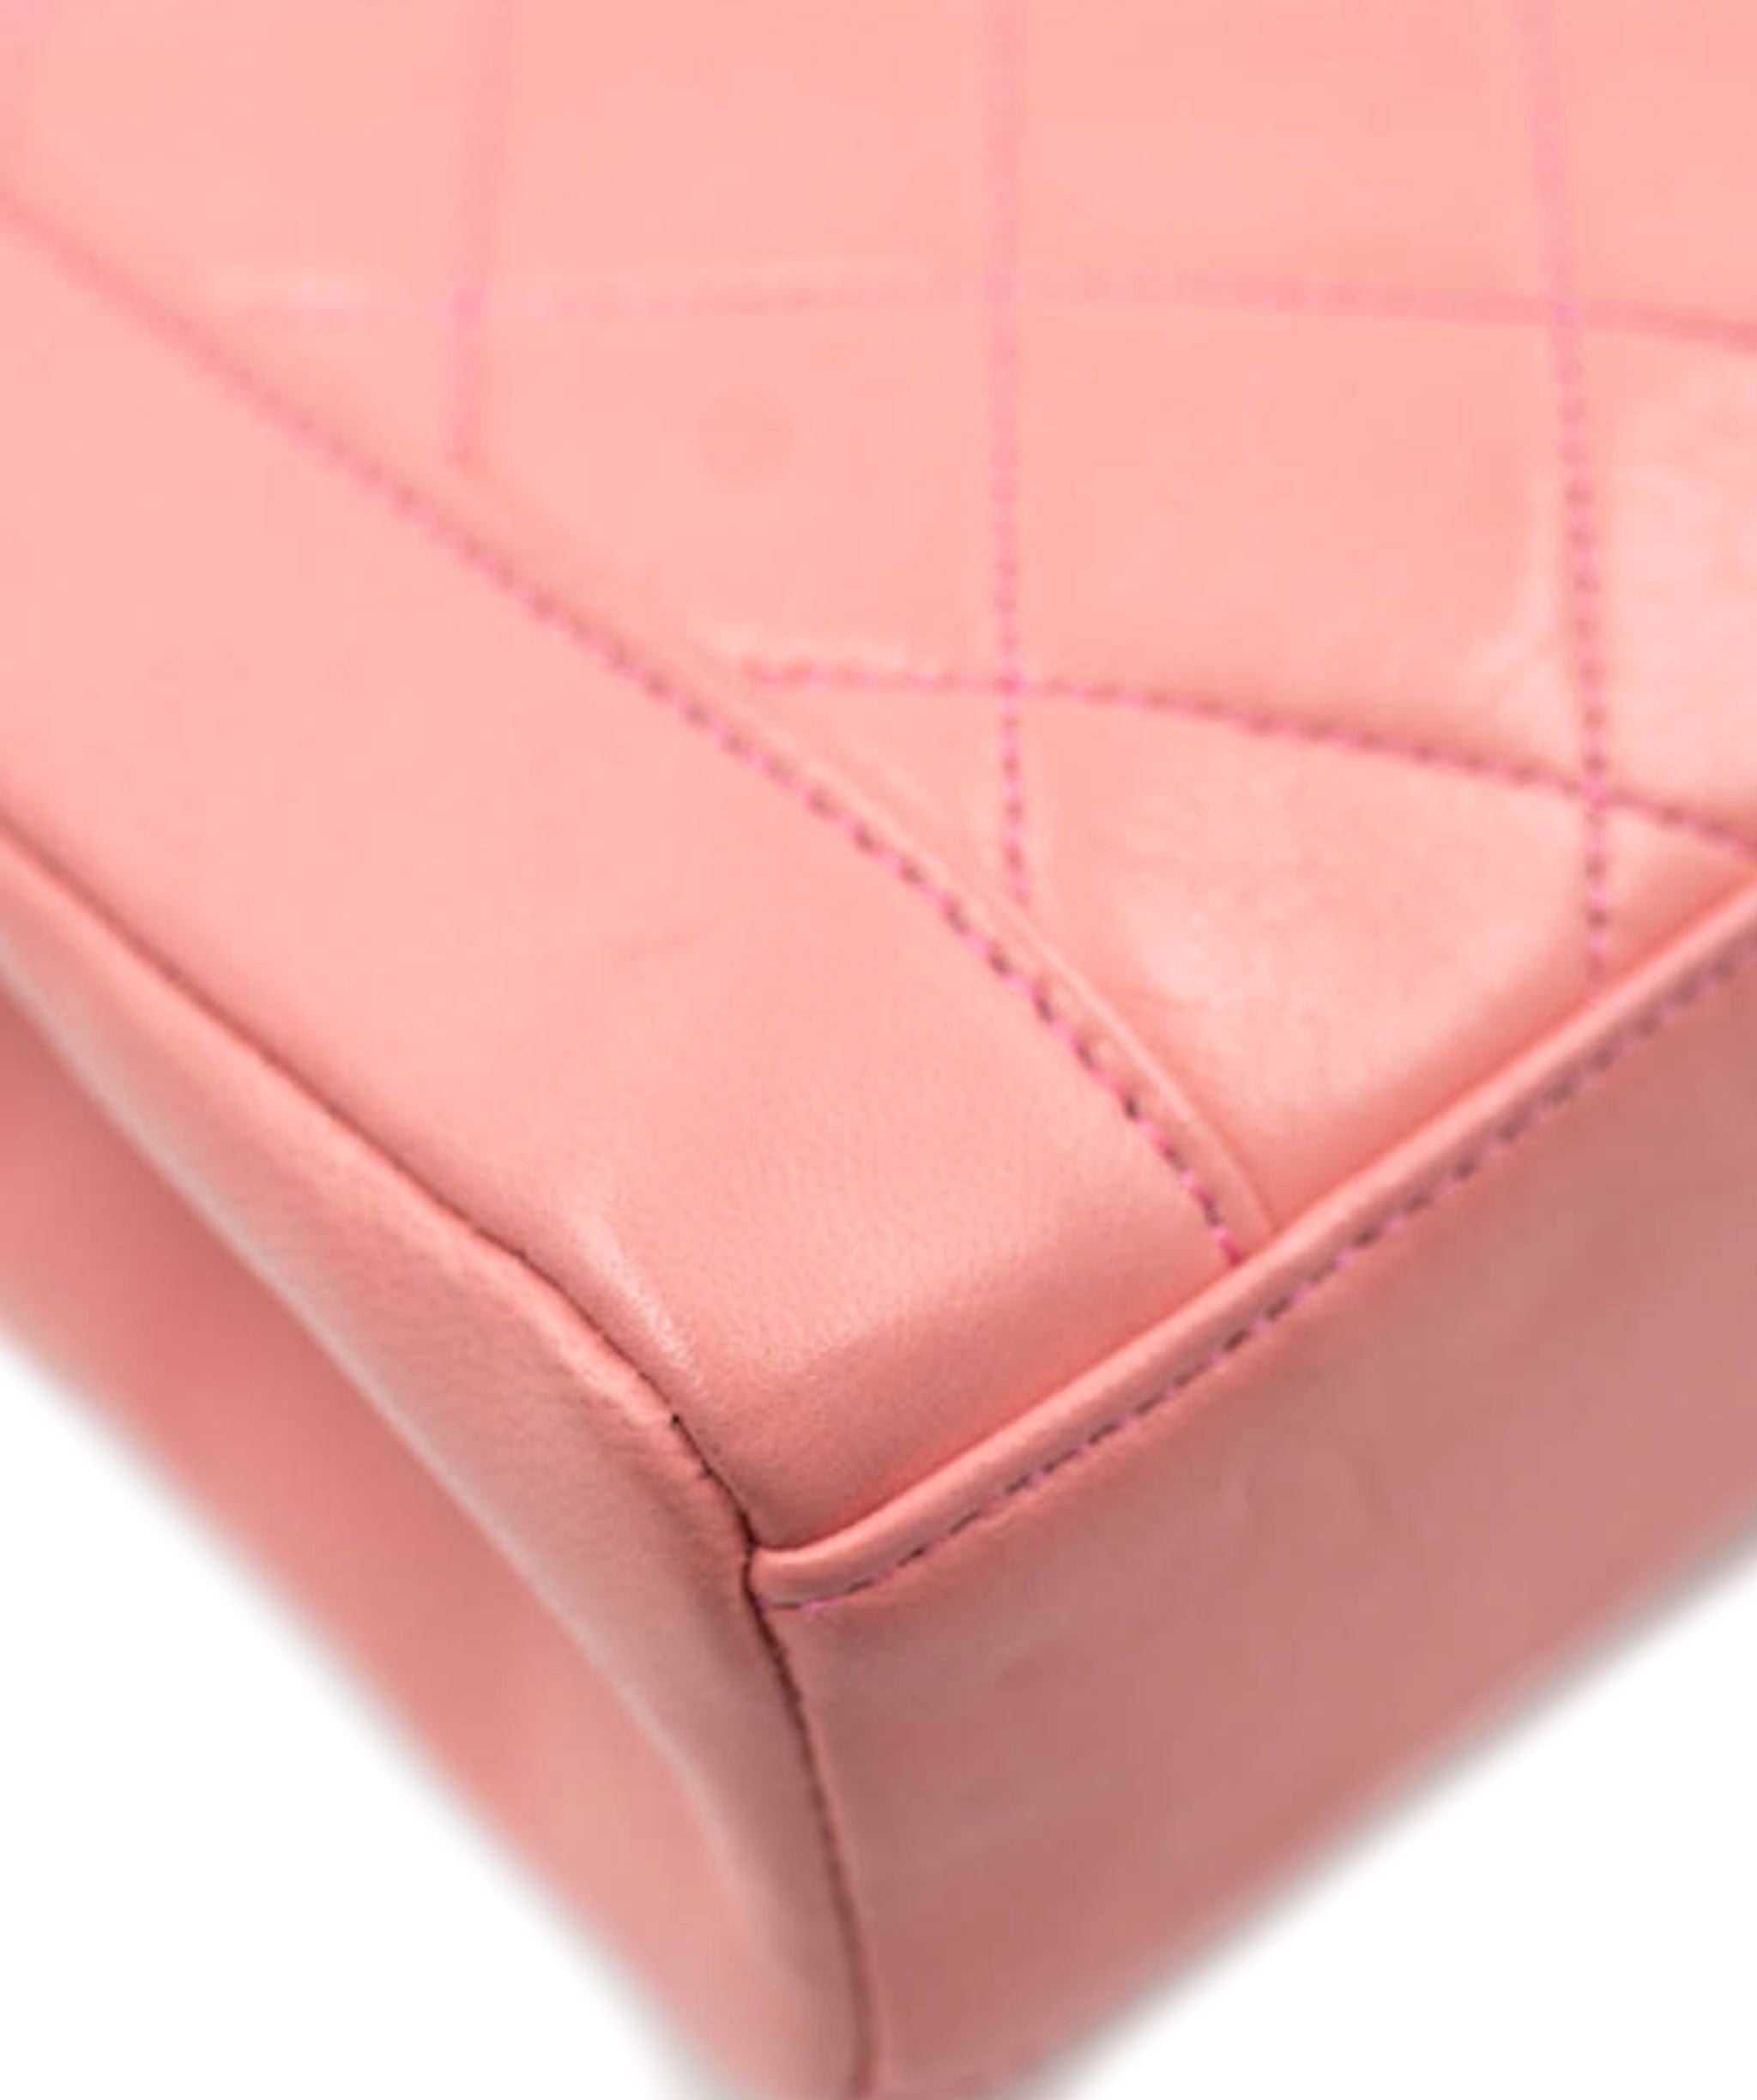 Chanel Chanel Pink Diana Flap Bag - AWL3634